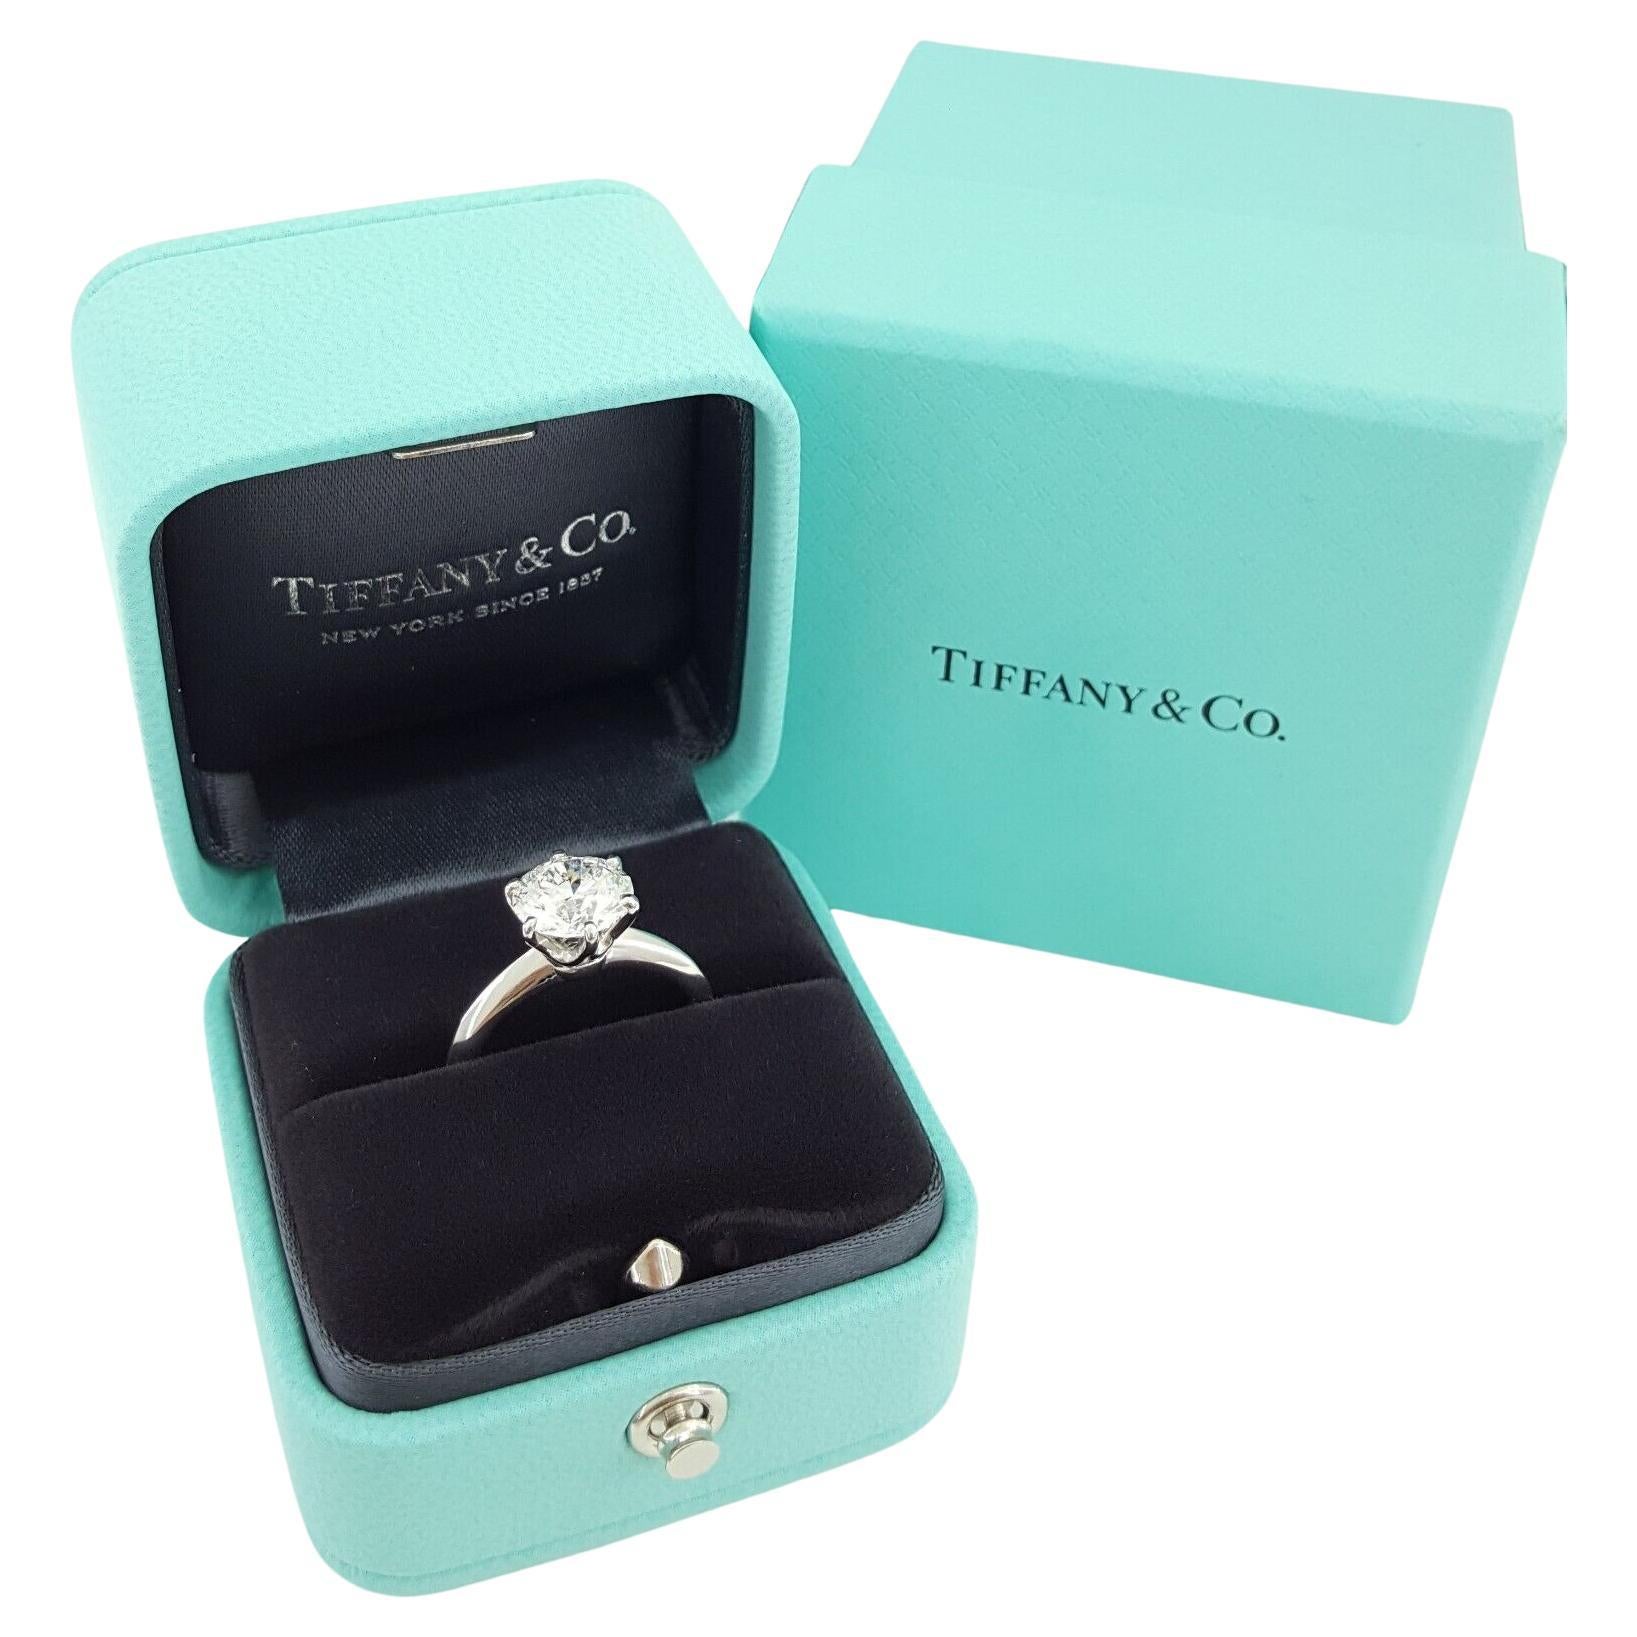 Tiffany & Co. 2.02 Carat Round Cut Diamond Platinum Solitaire Ring